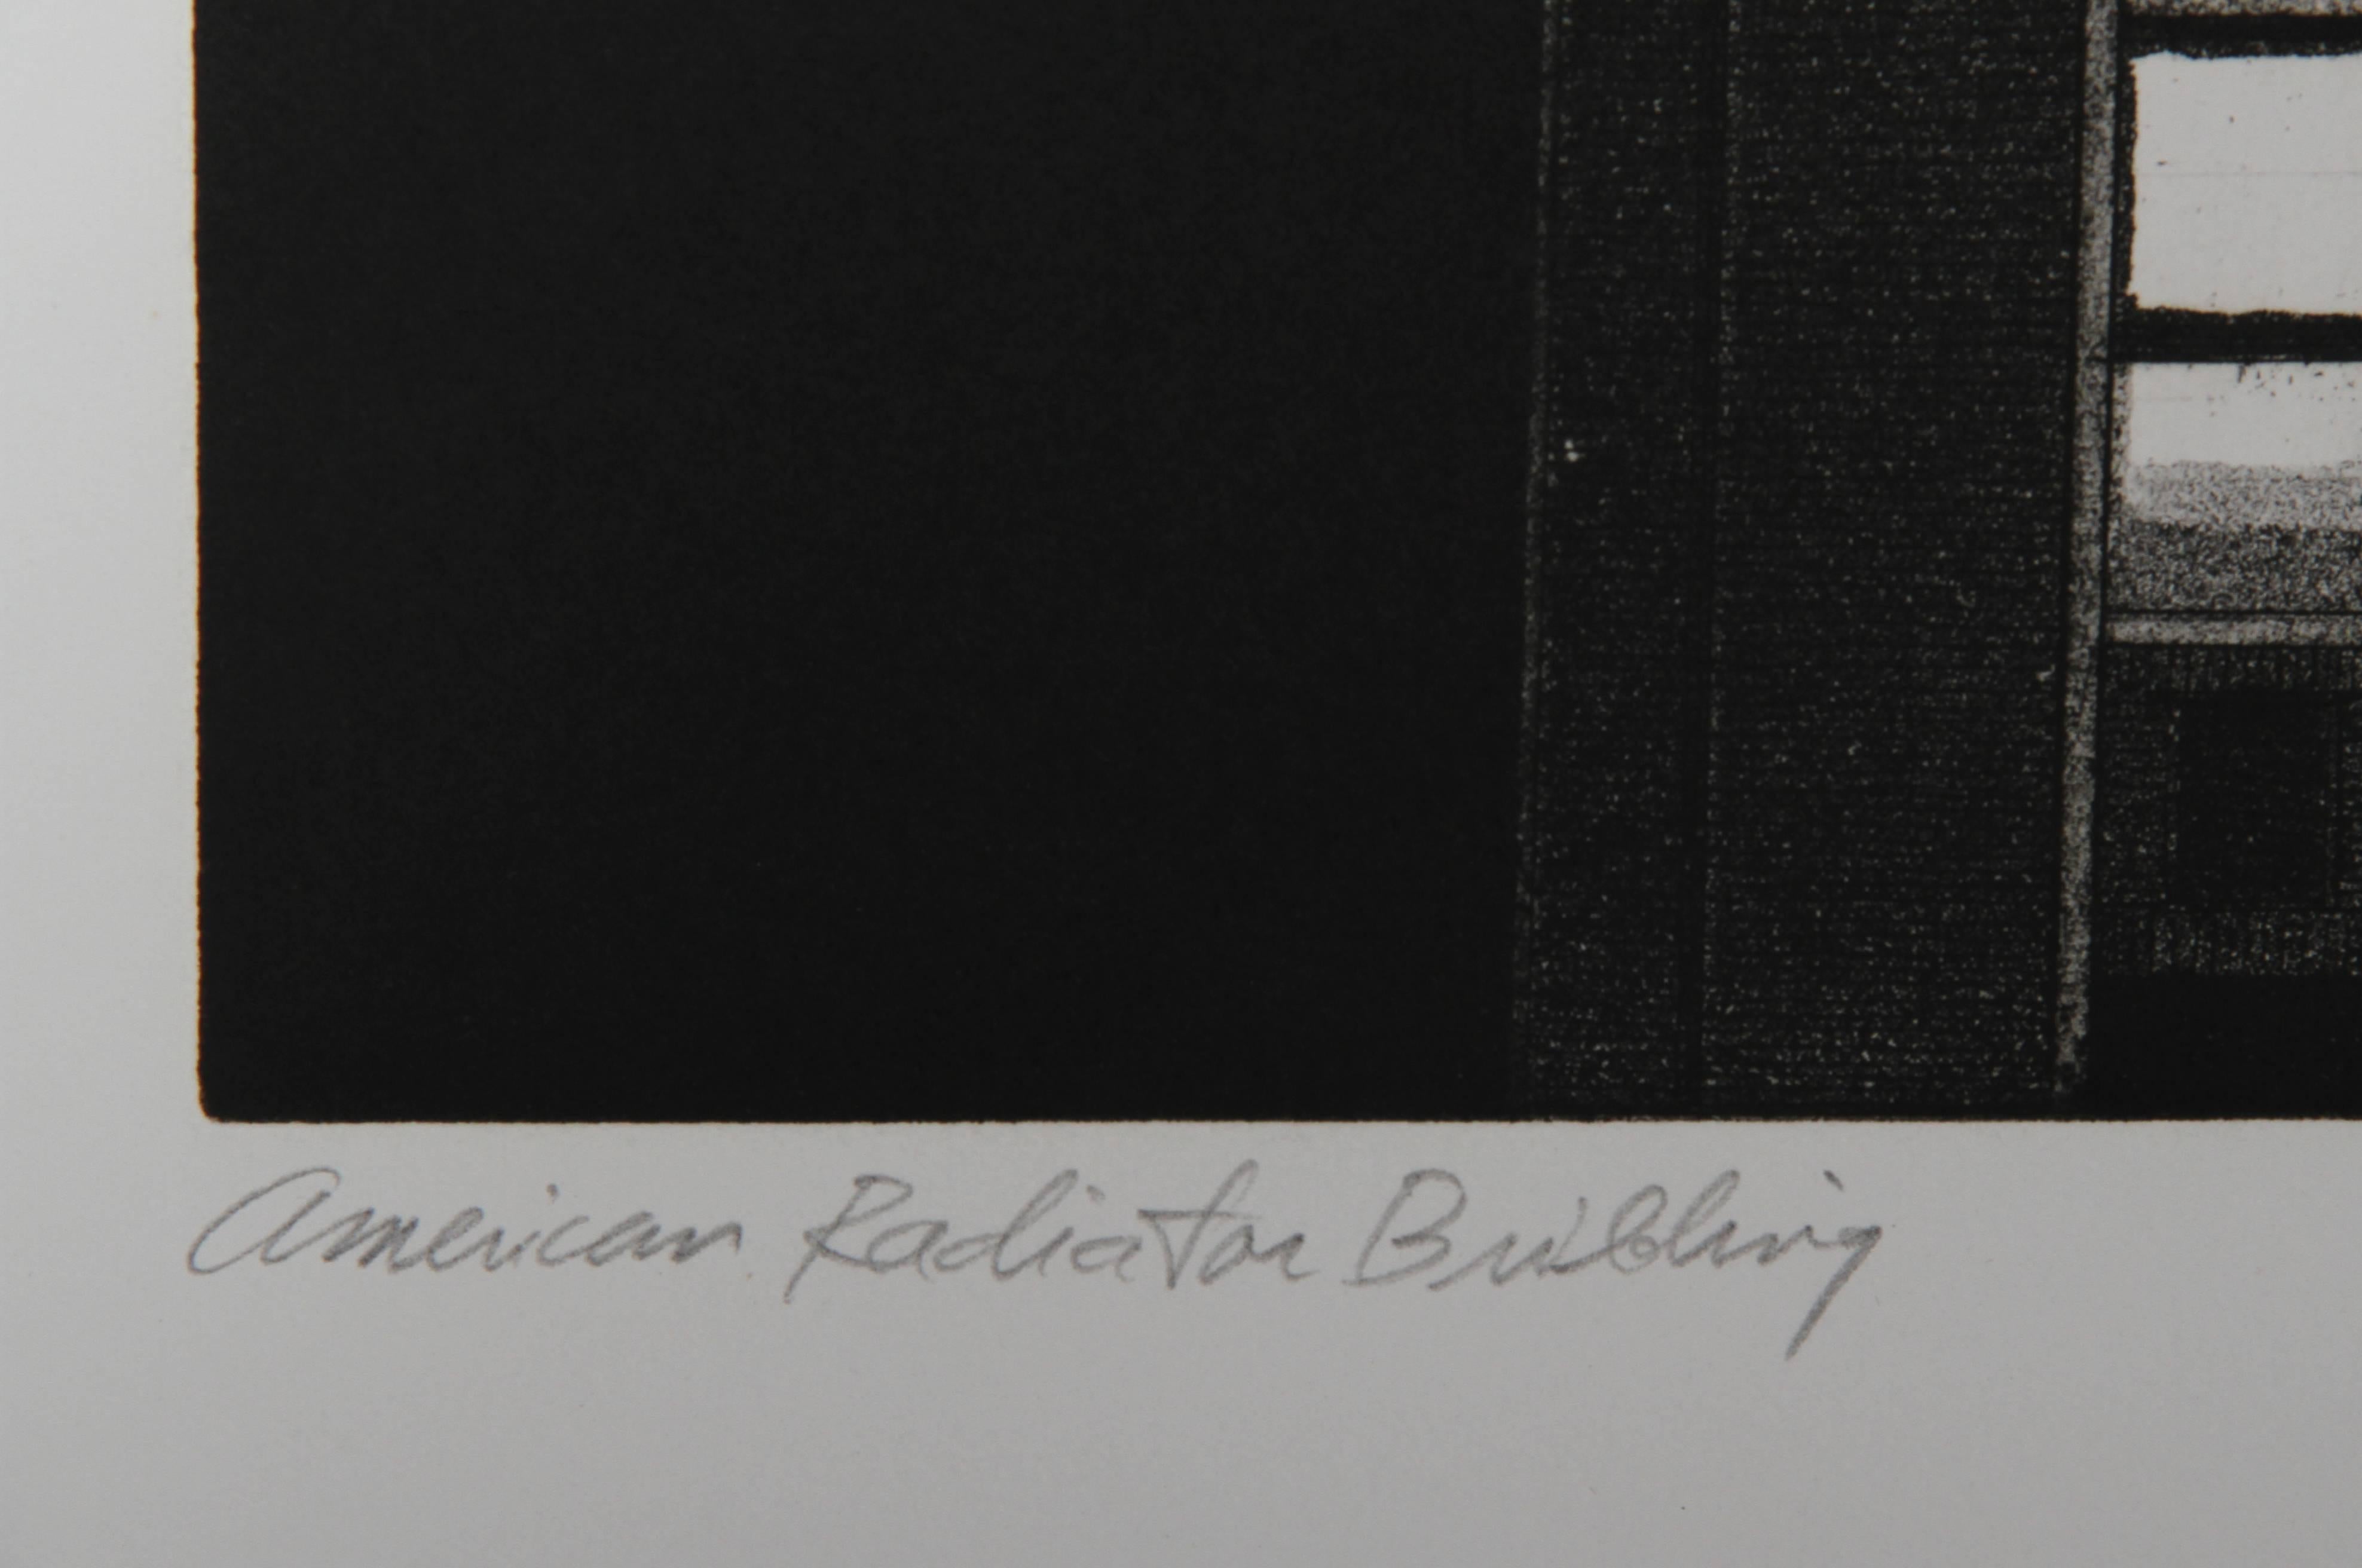 « American Radiator Building », gravure en bois et eau-forte de Richard Haas en vente 2